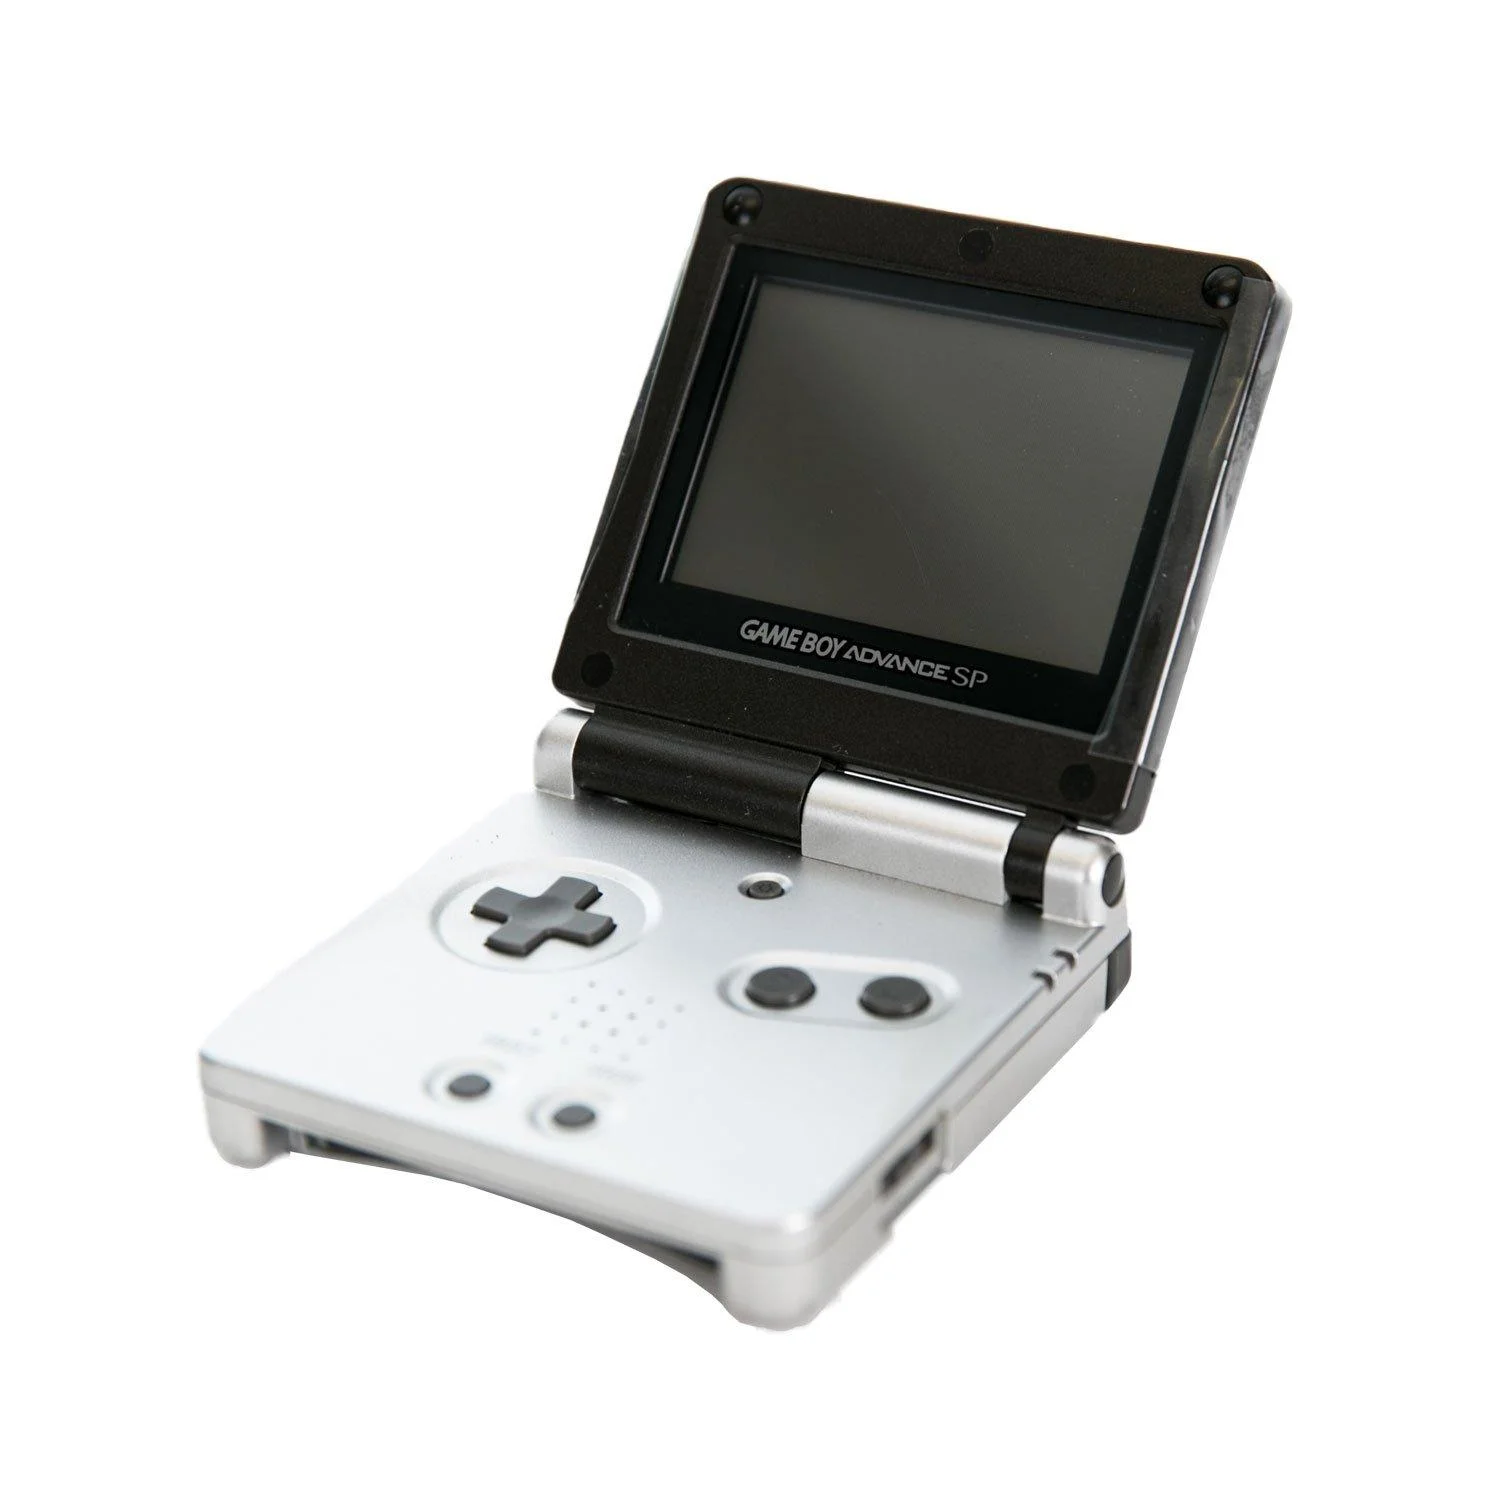  Nintendo Game Boy Advance SP Silver Black Console